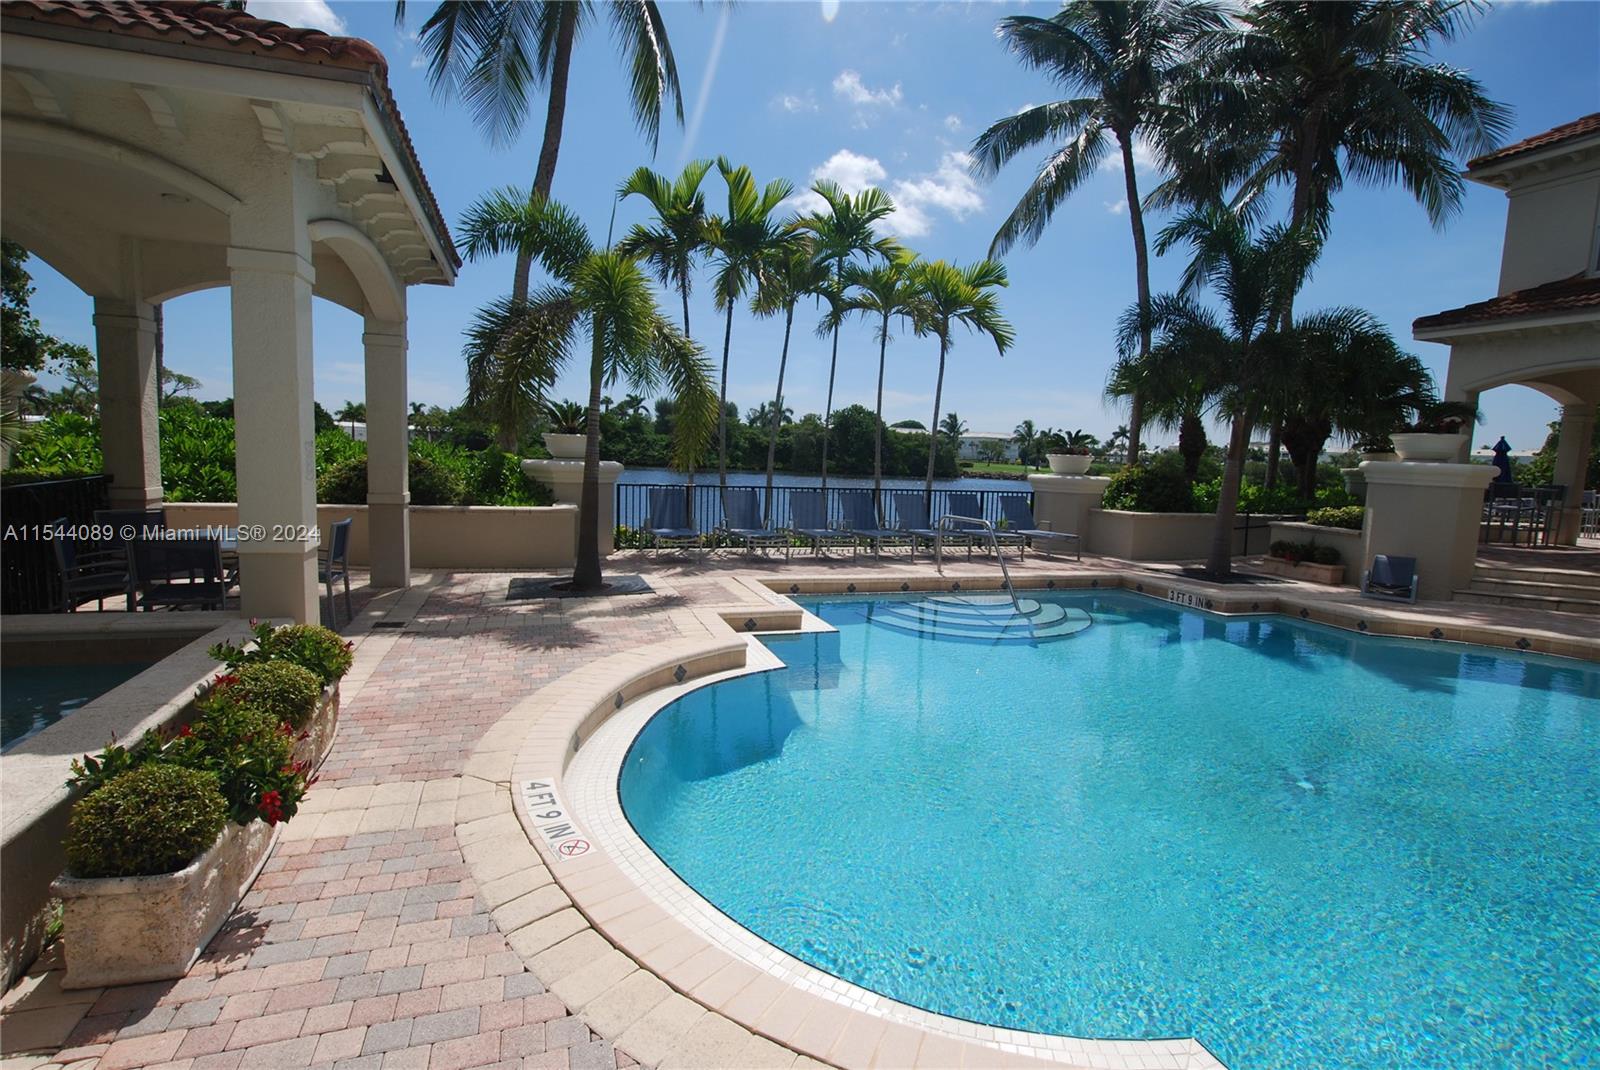 Rental Property at 4111 Tuscany Way Way 4111, Boynton Beach, Palm Beach County, Florida - Bedrooms: 2 
Bathrooms: 2  - $2,600 MO.